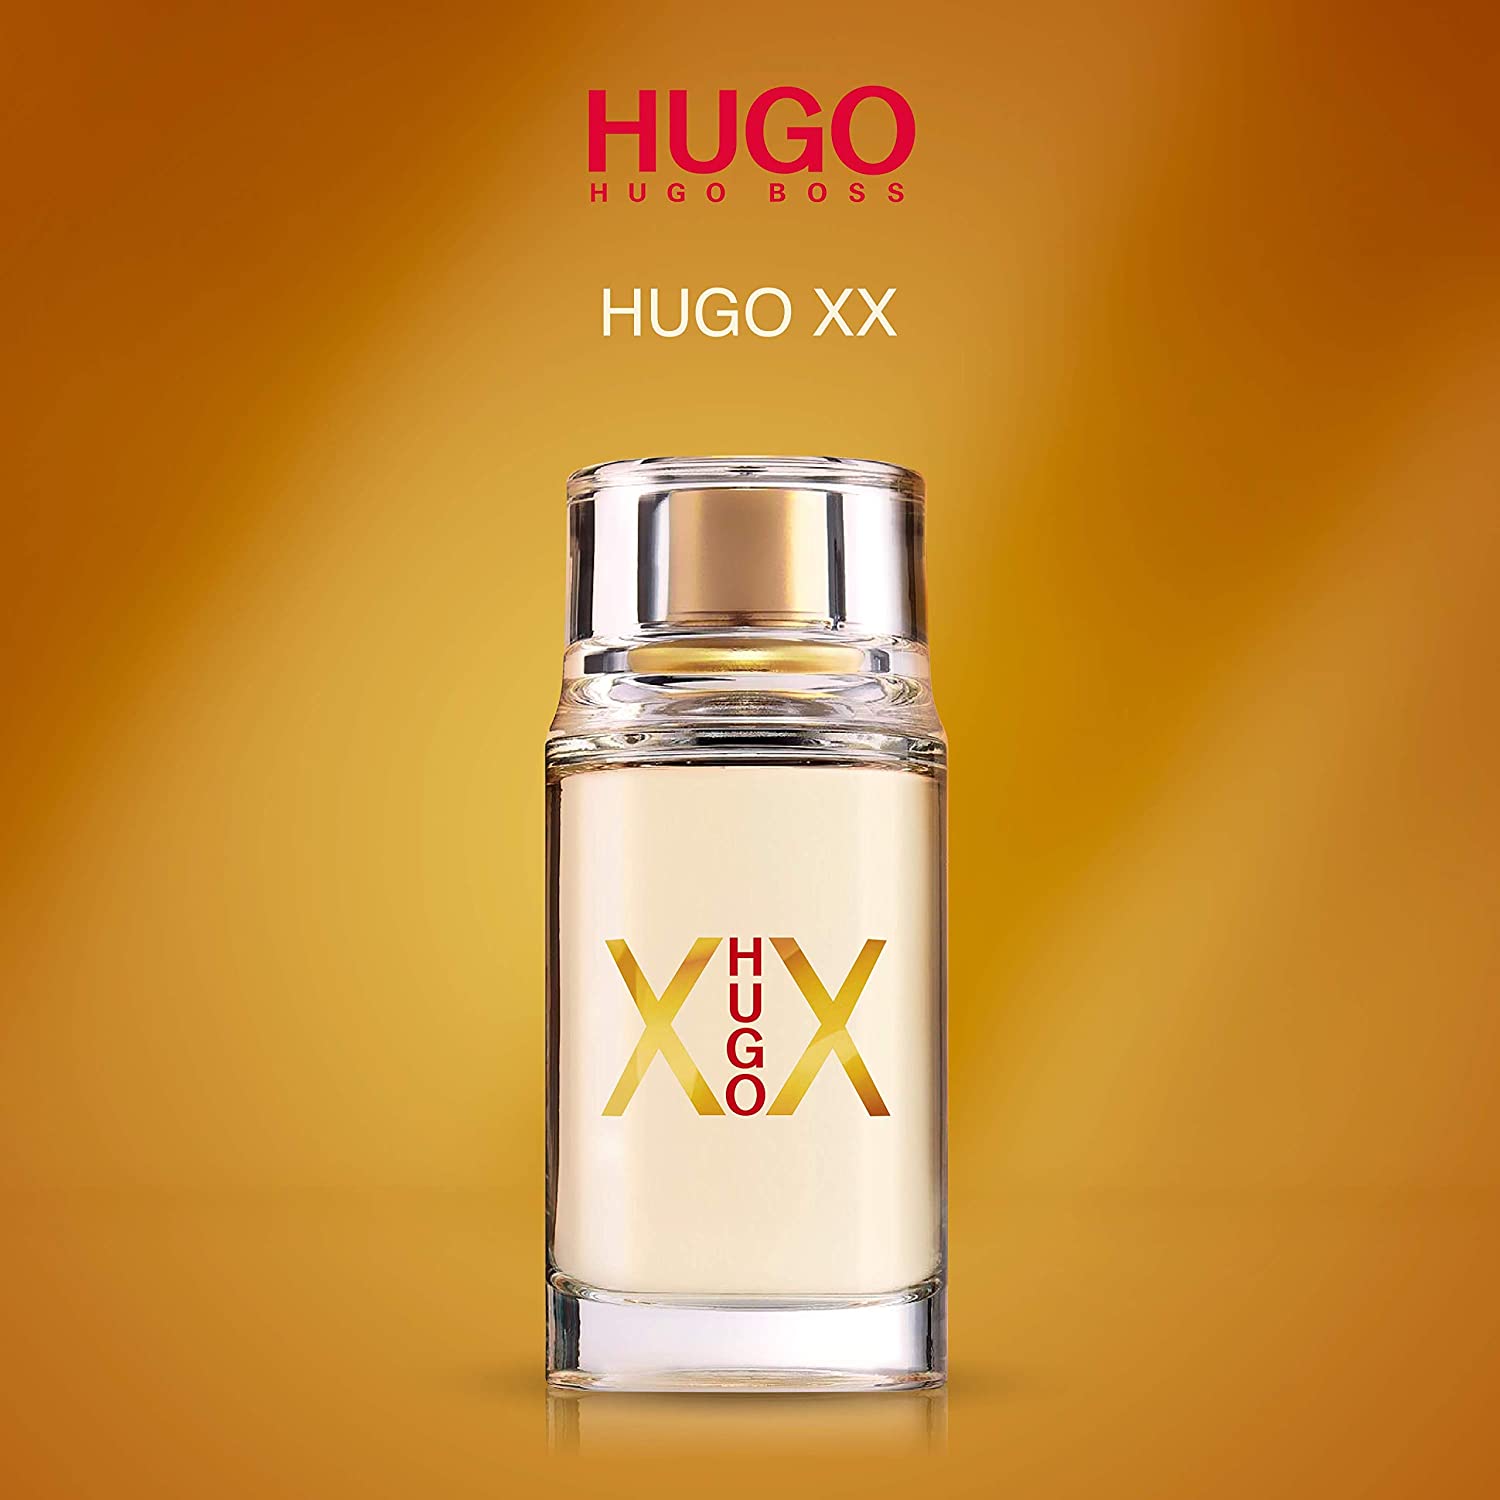 hugo xx hugo boss